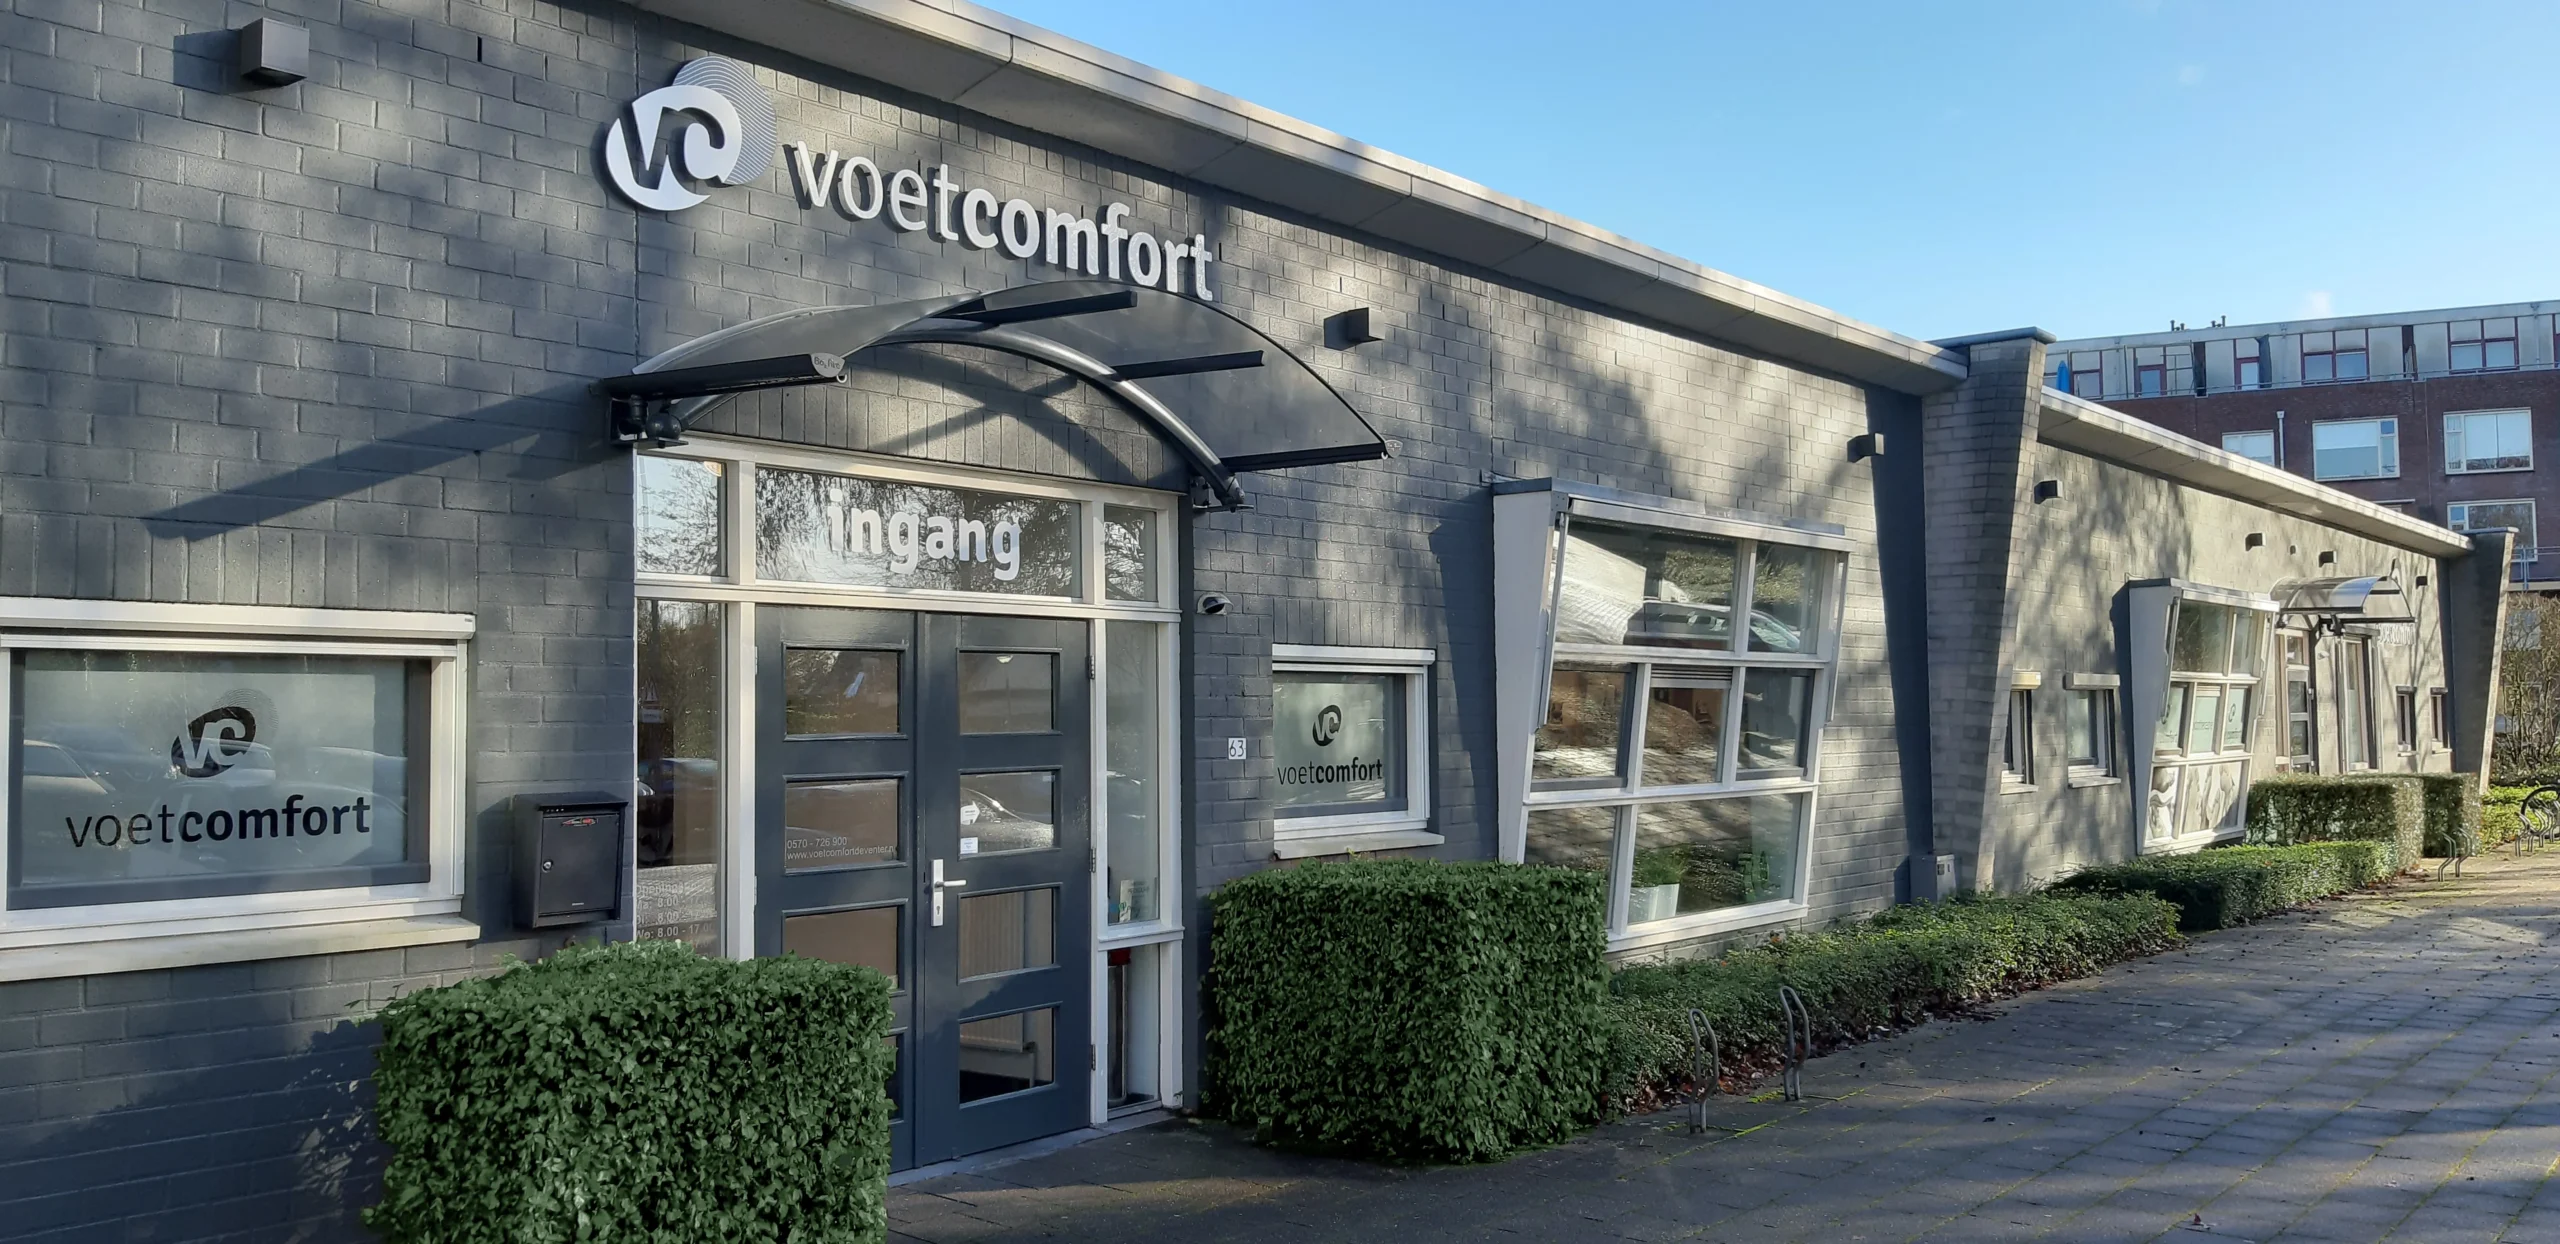 Voetcomfort Wemessage Case